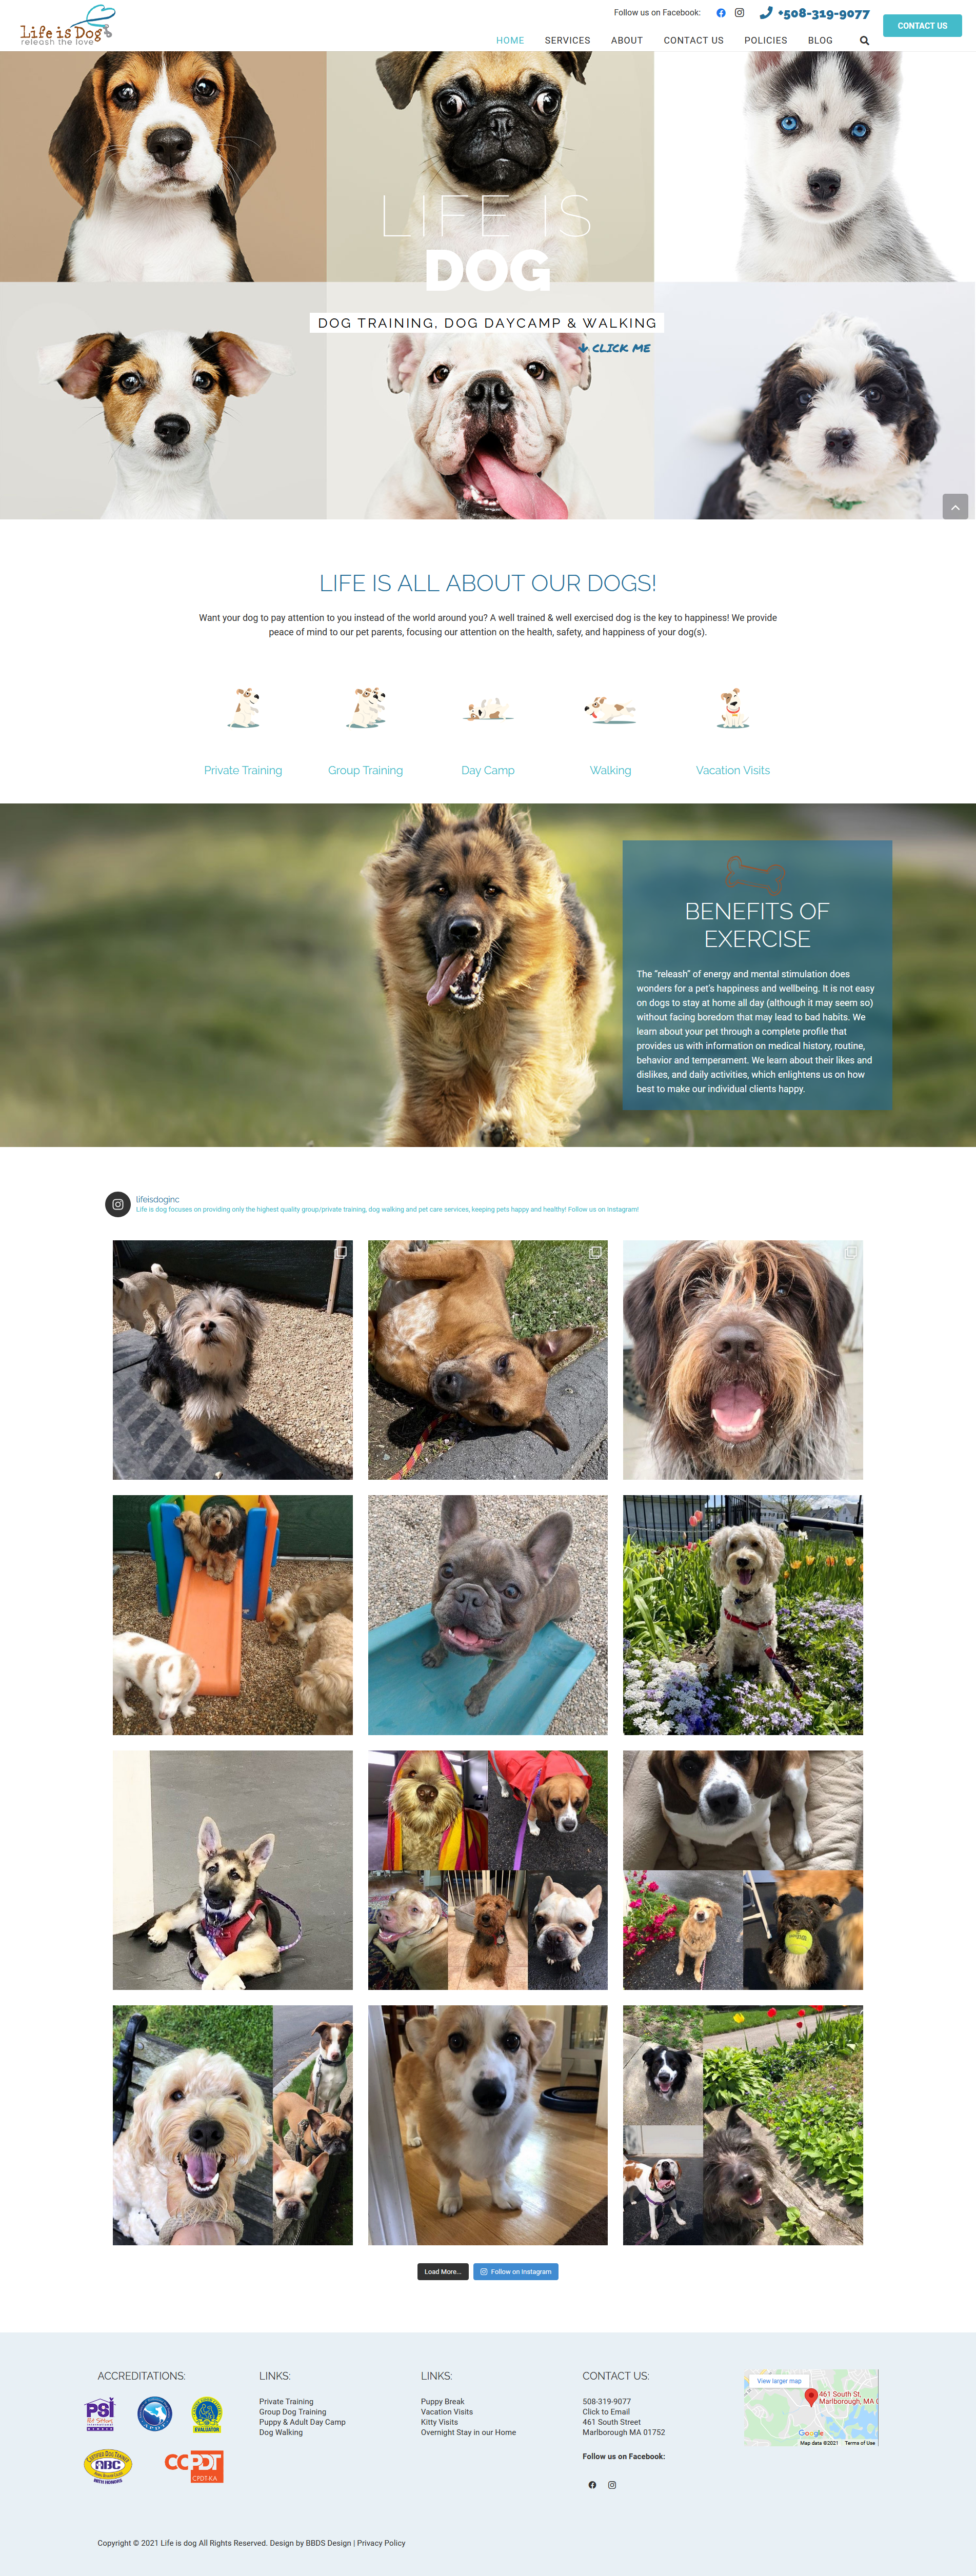  Life is Dog - Dog Training and Walking Website